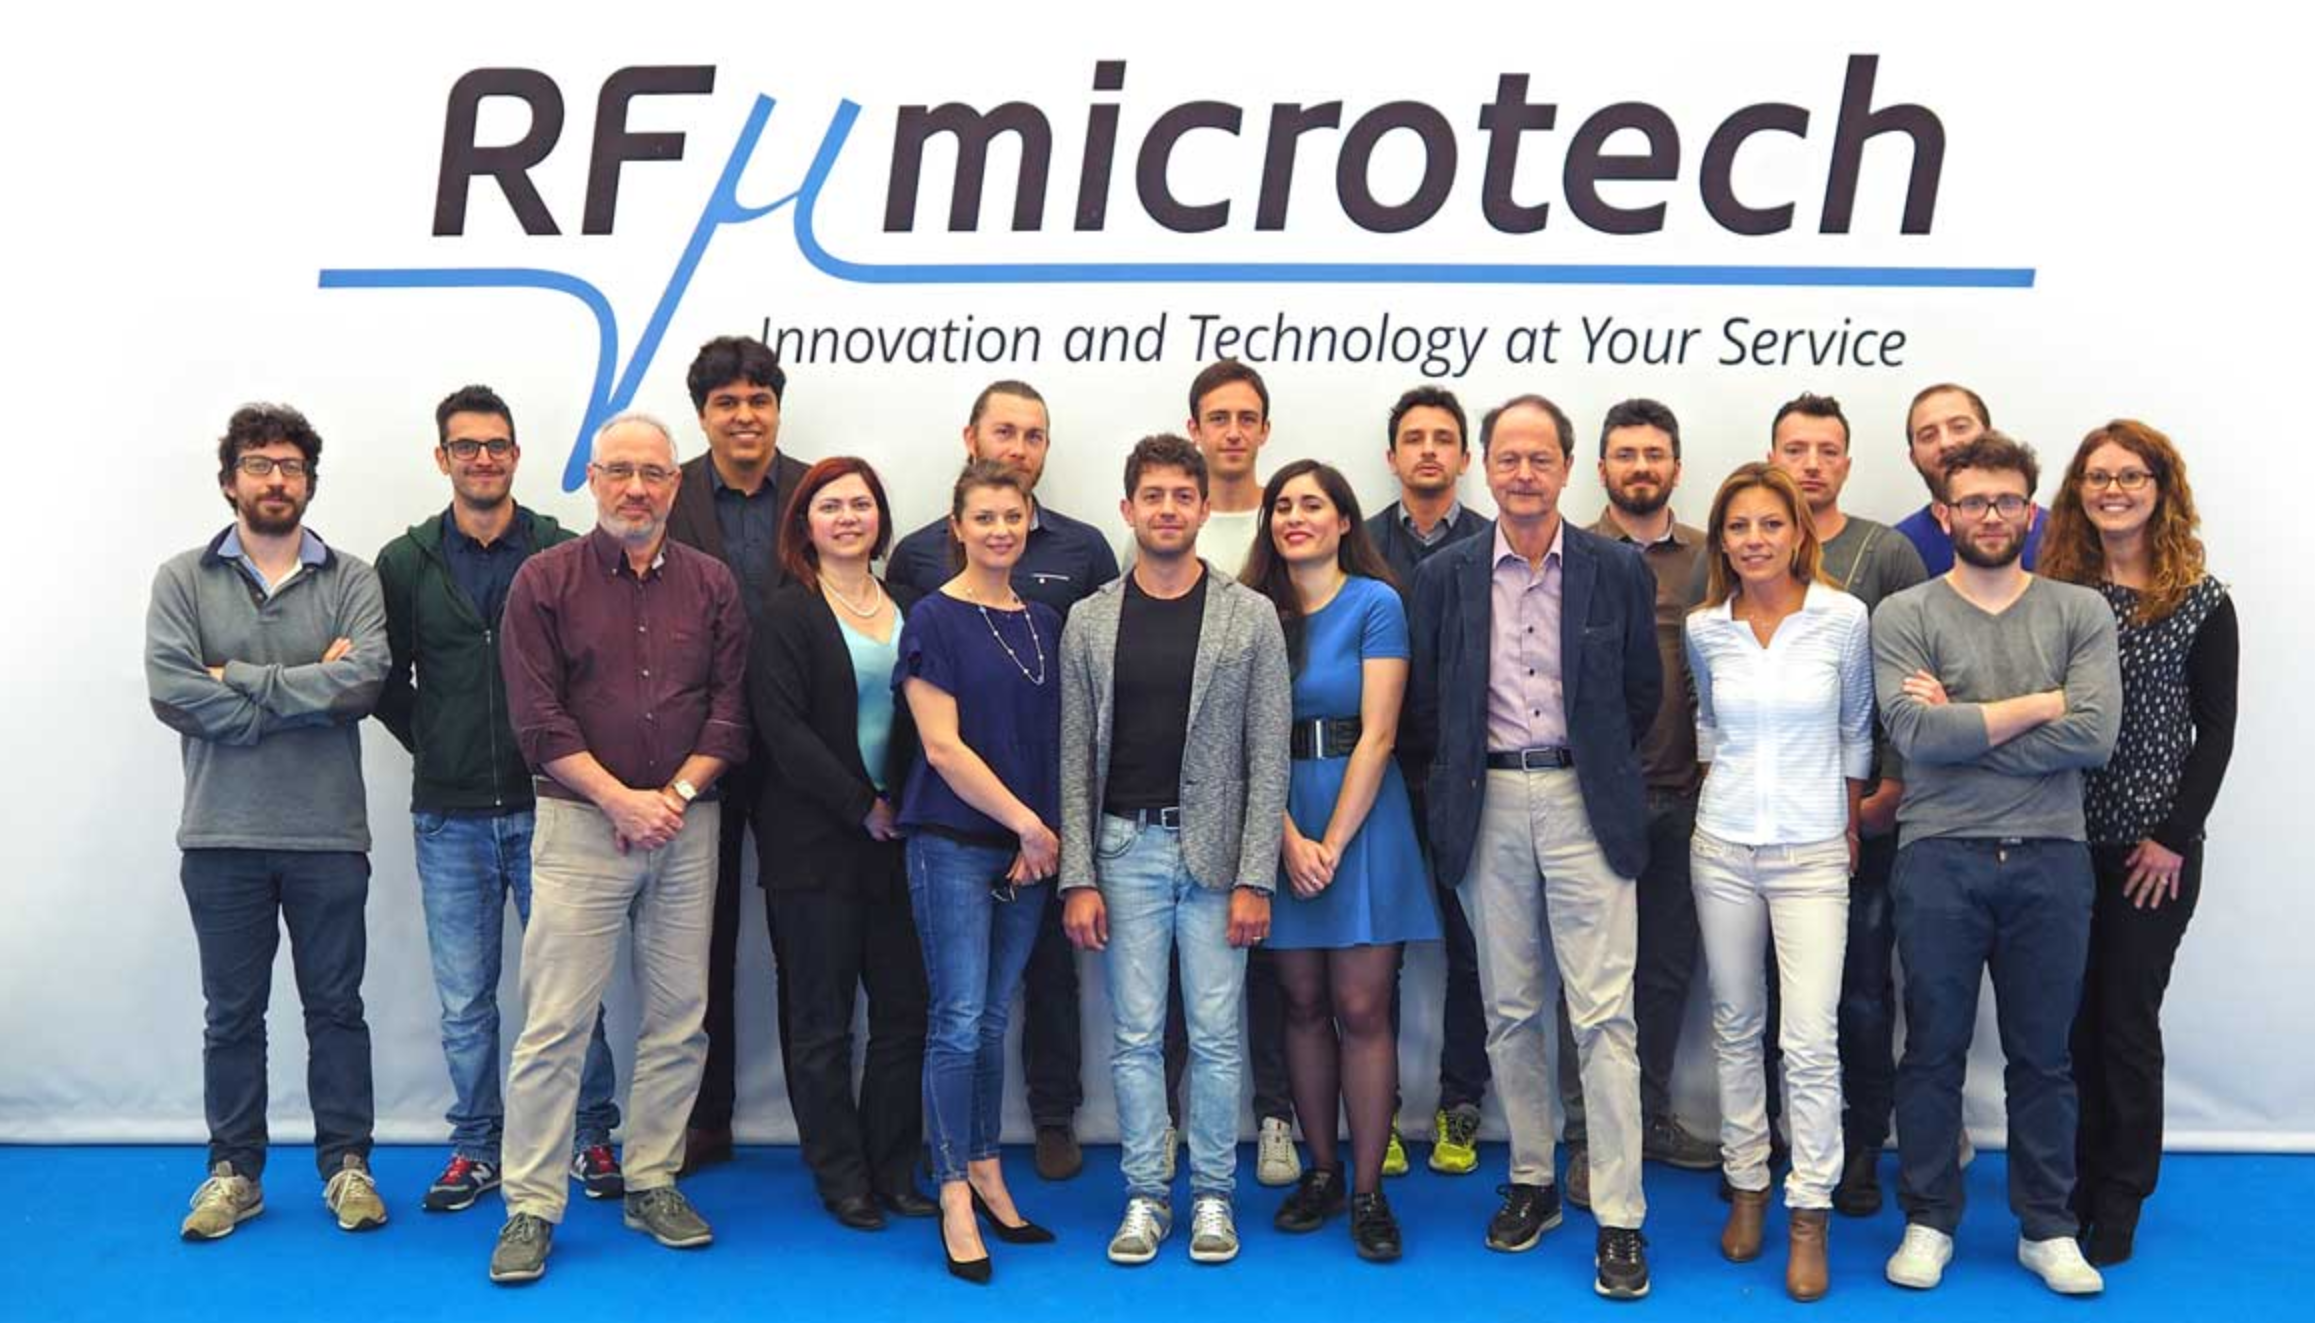 The RF Microtech team. Image: RF Microtech